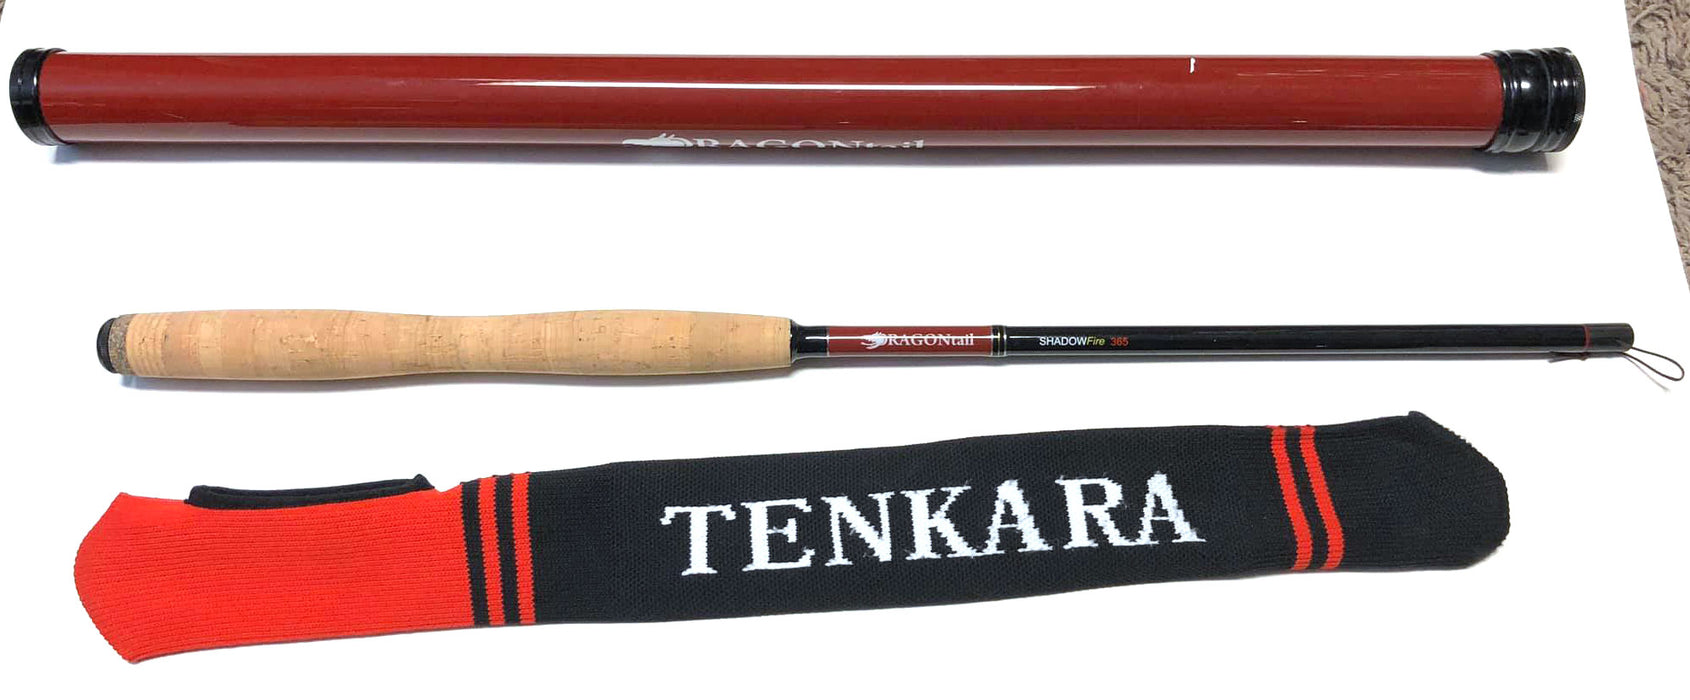 USED Refurbished - Tenkara Rod — DRAGONtail Tenkara